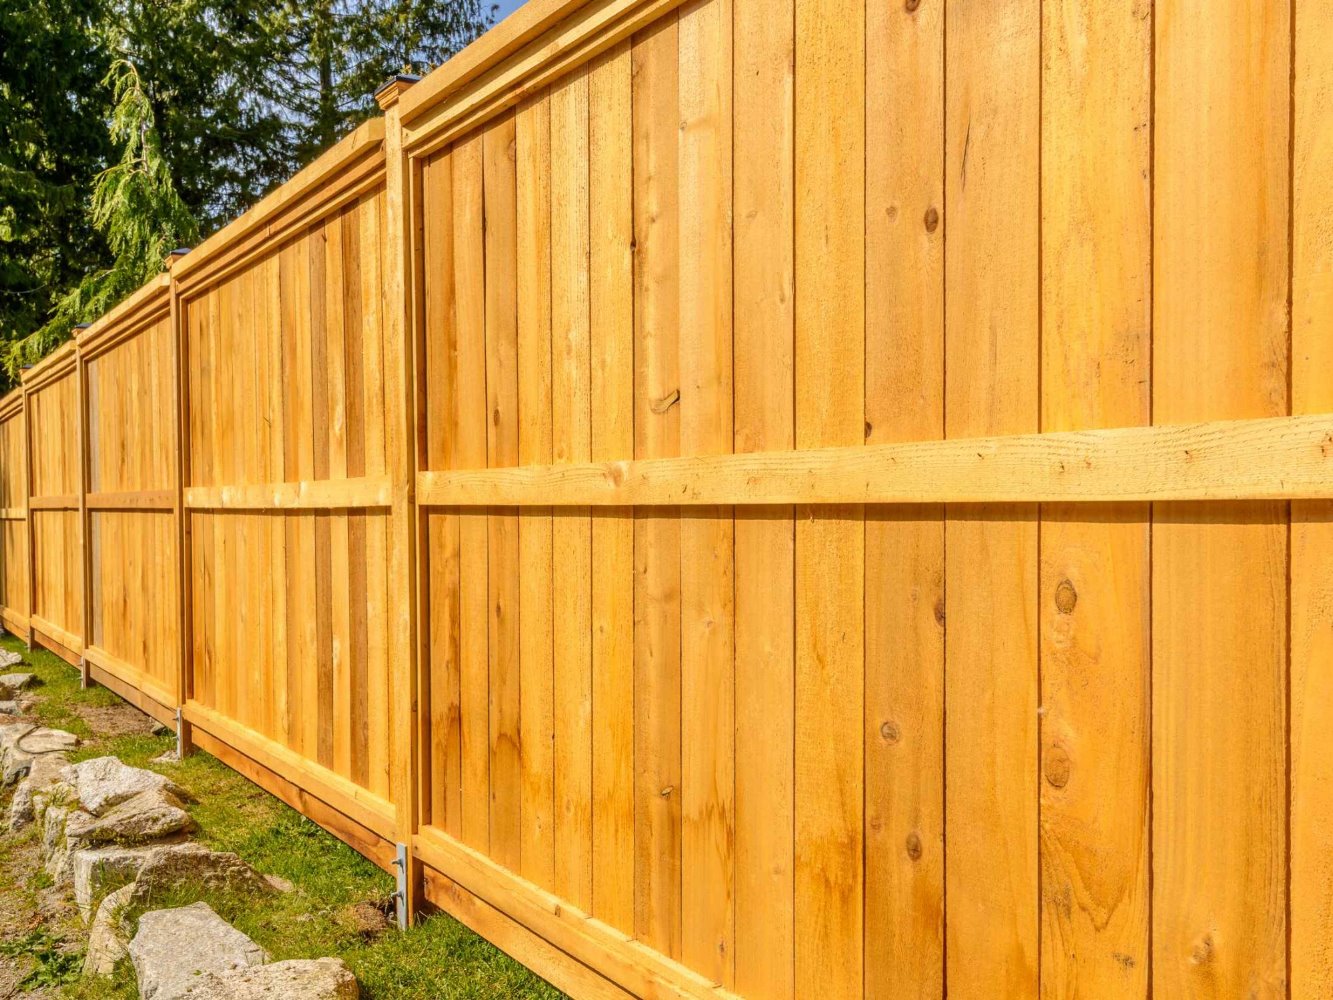 Fairgrove MO cap and trim style wood fence